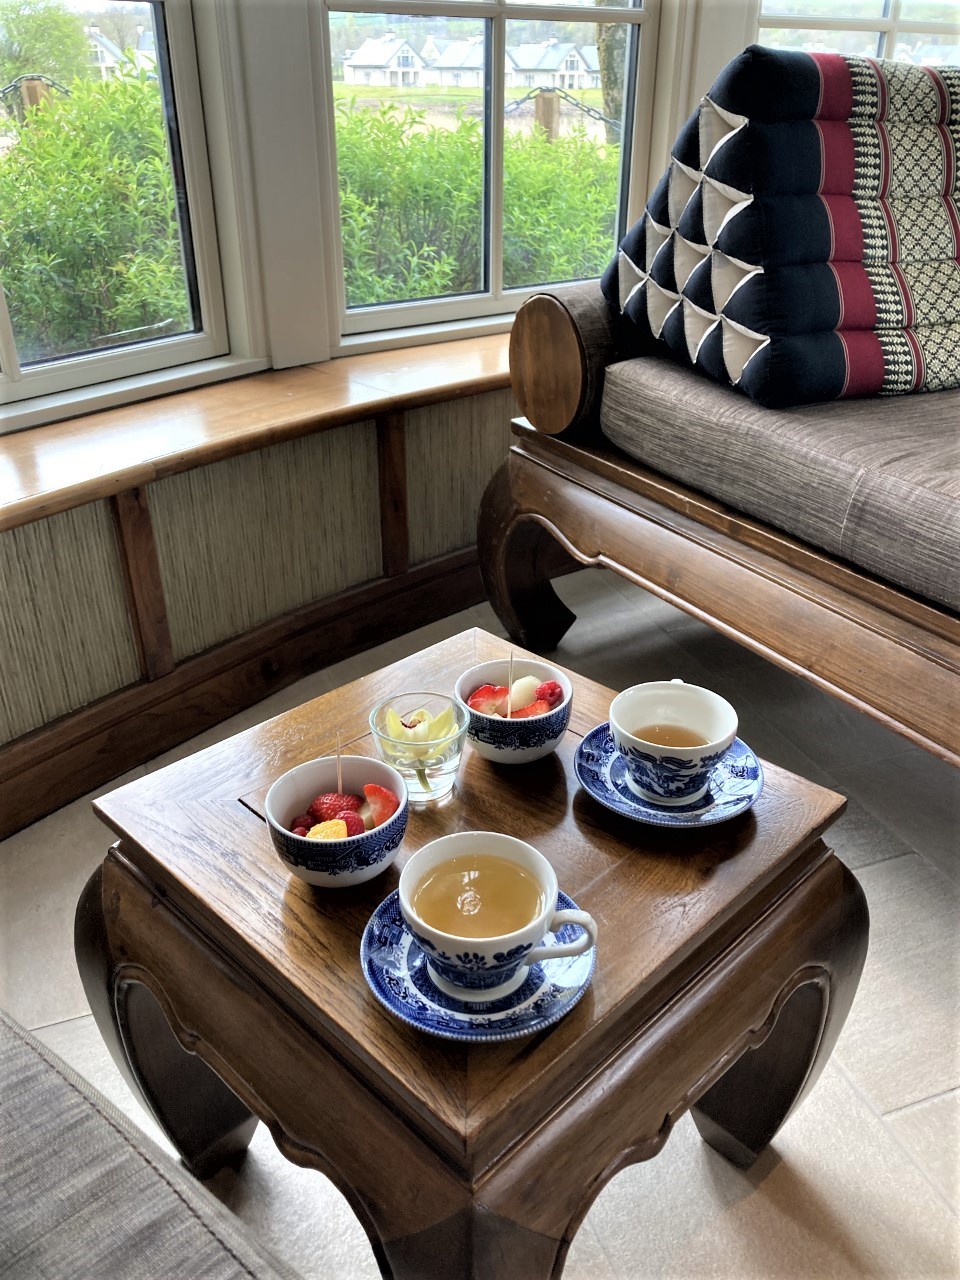 Post-massage Jasmine tea and fruit bowl in the Sabbi Sabbi room at the Thai Spa.